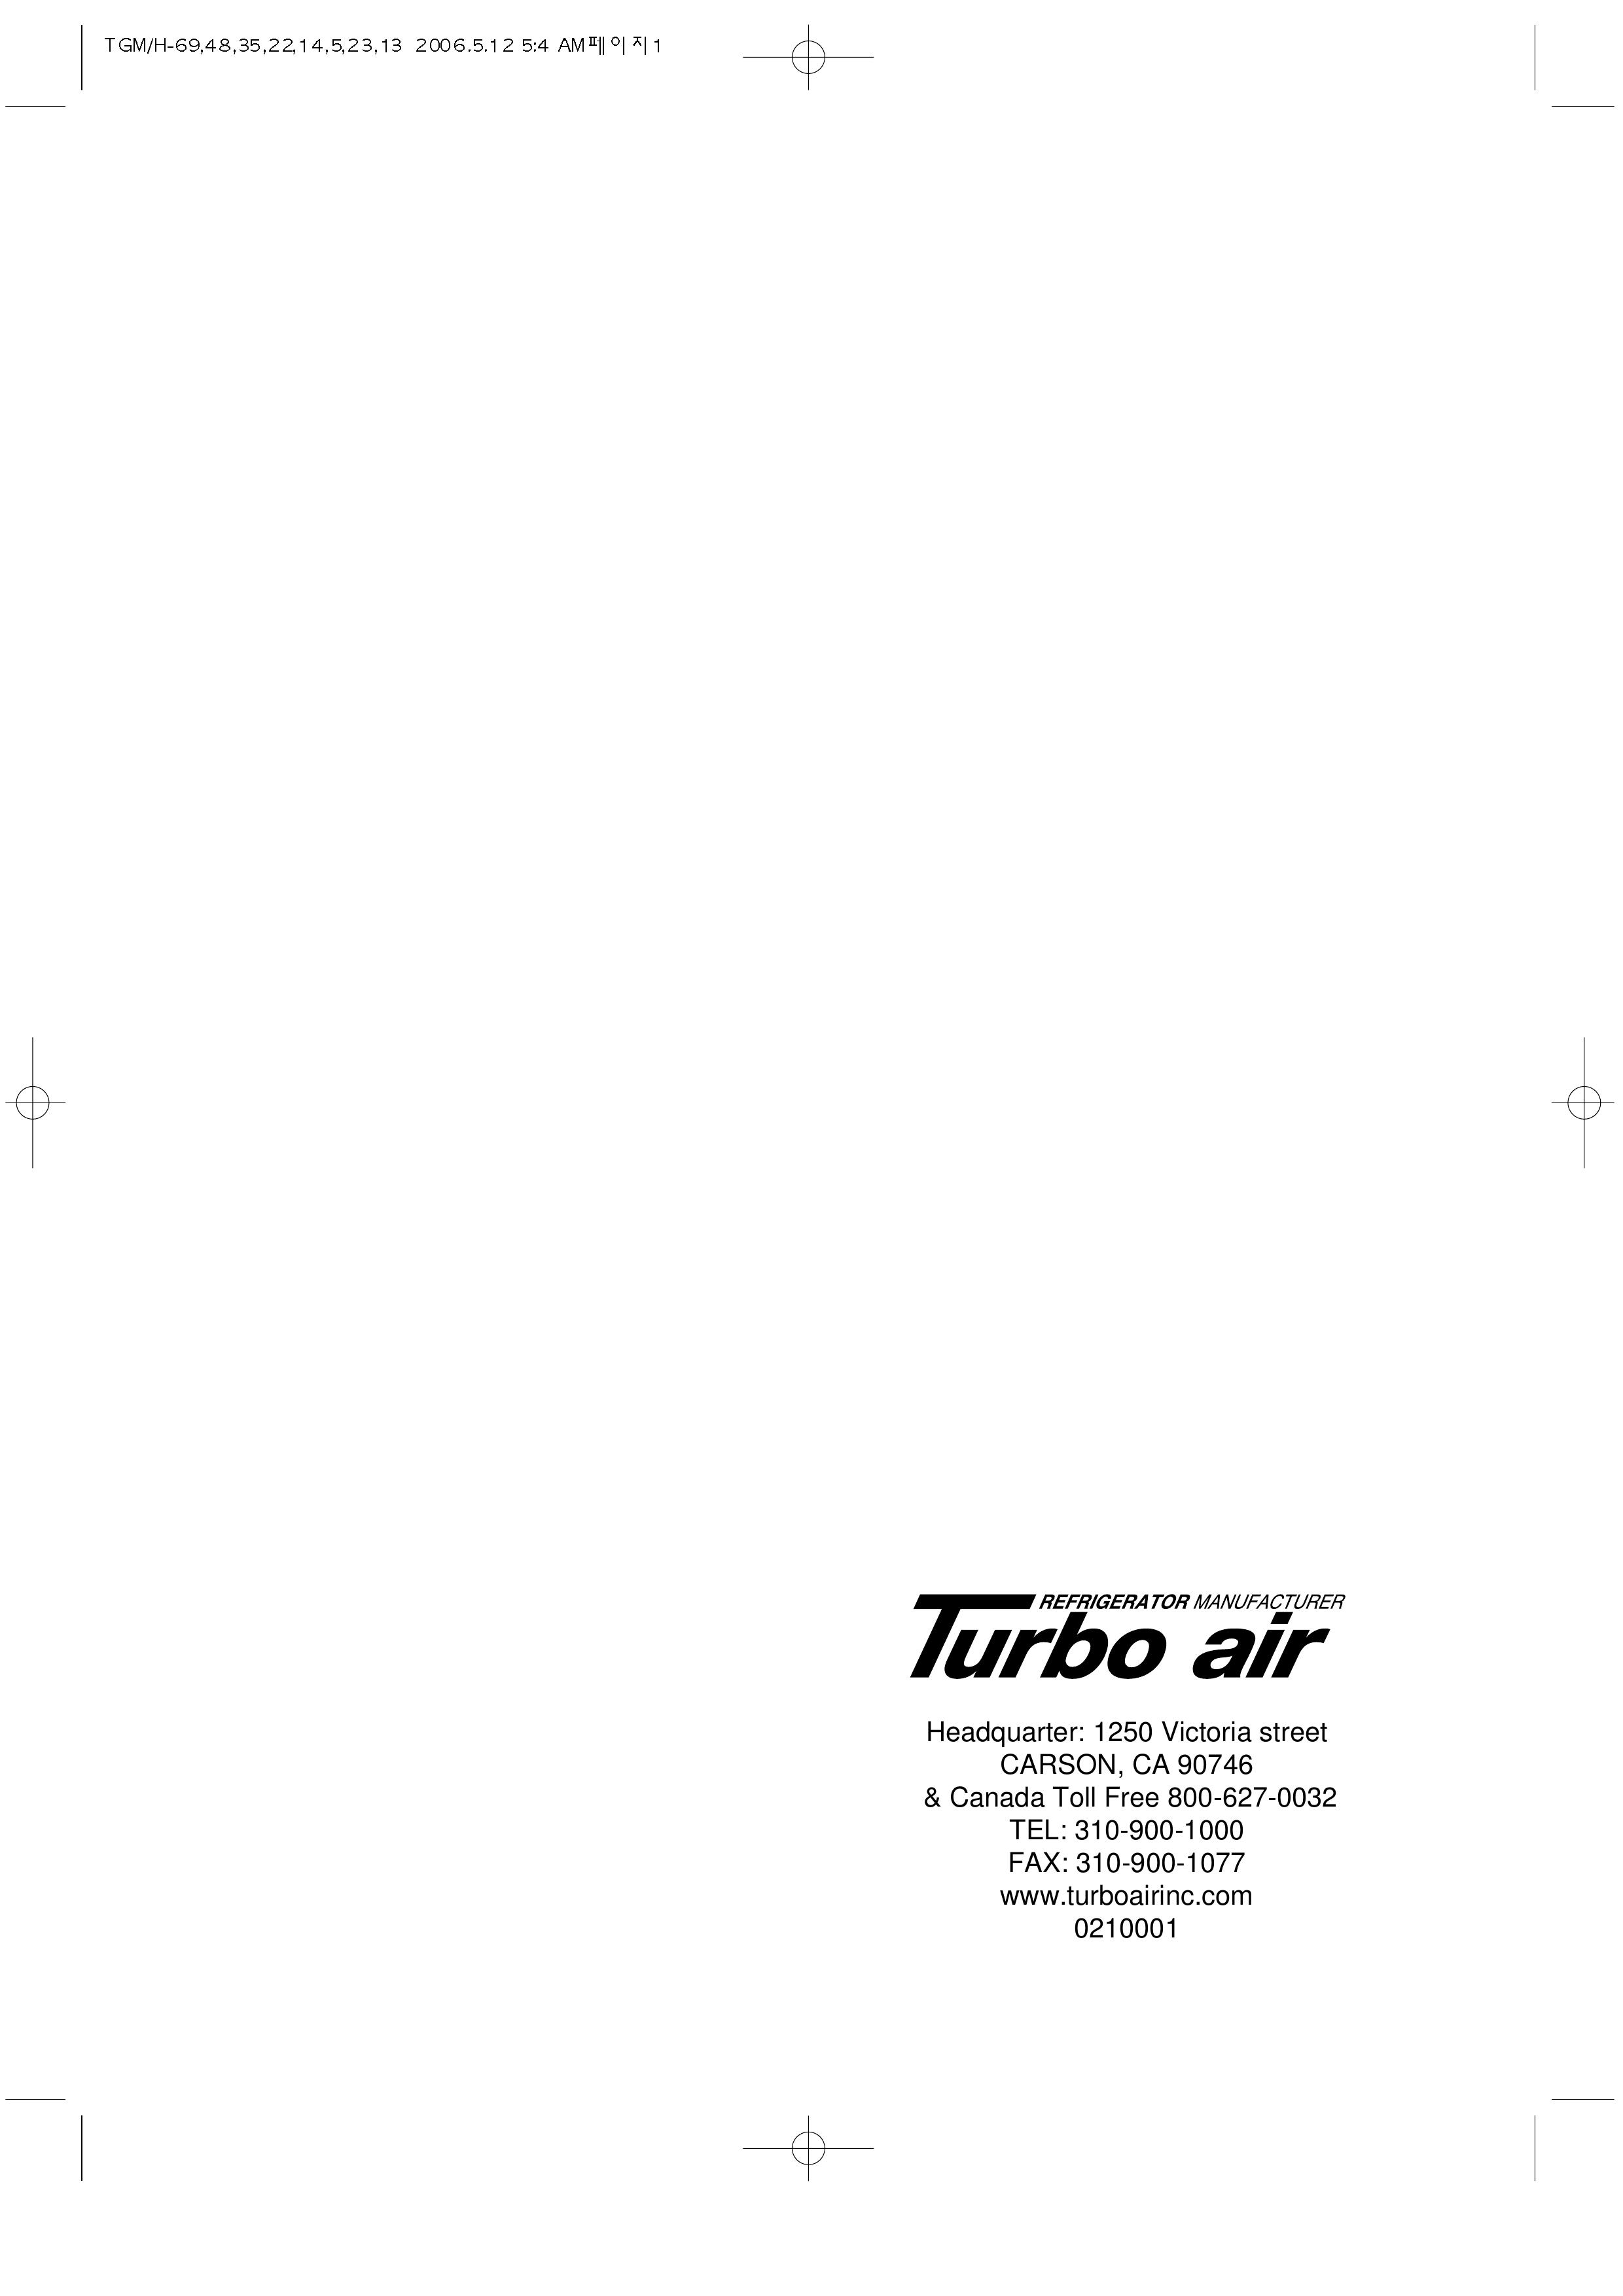 Turbo Air TGM-11RV Refrigerator User Manual